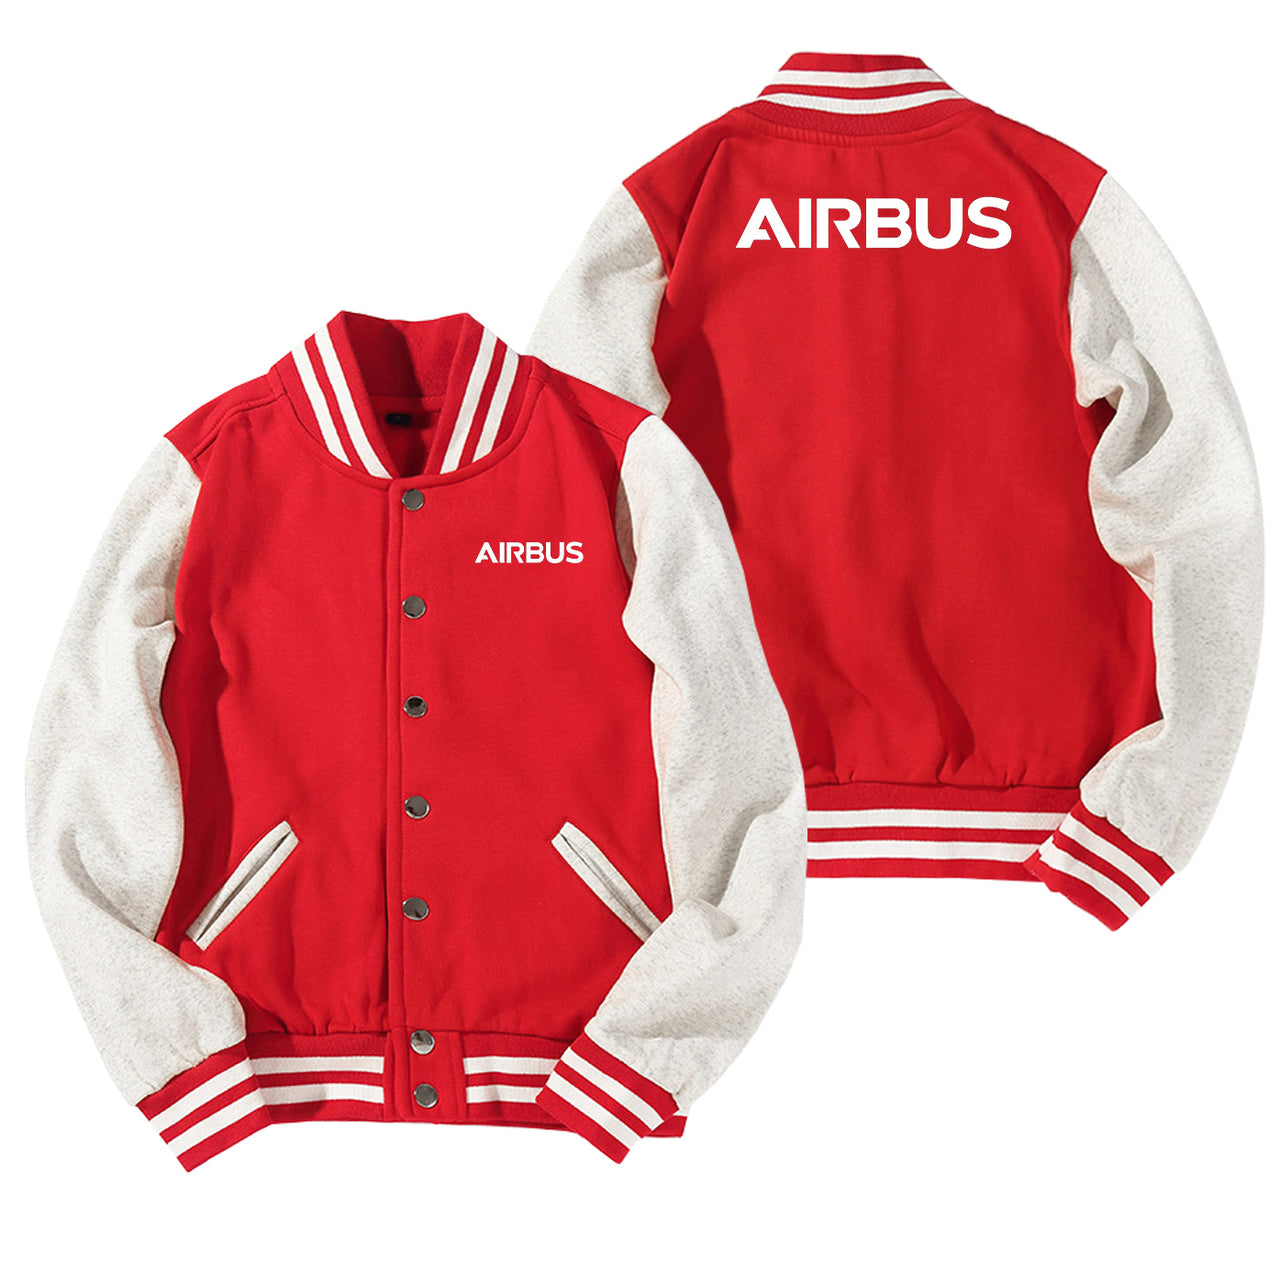 Airbus & Text Designed Baseball Style Jackets